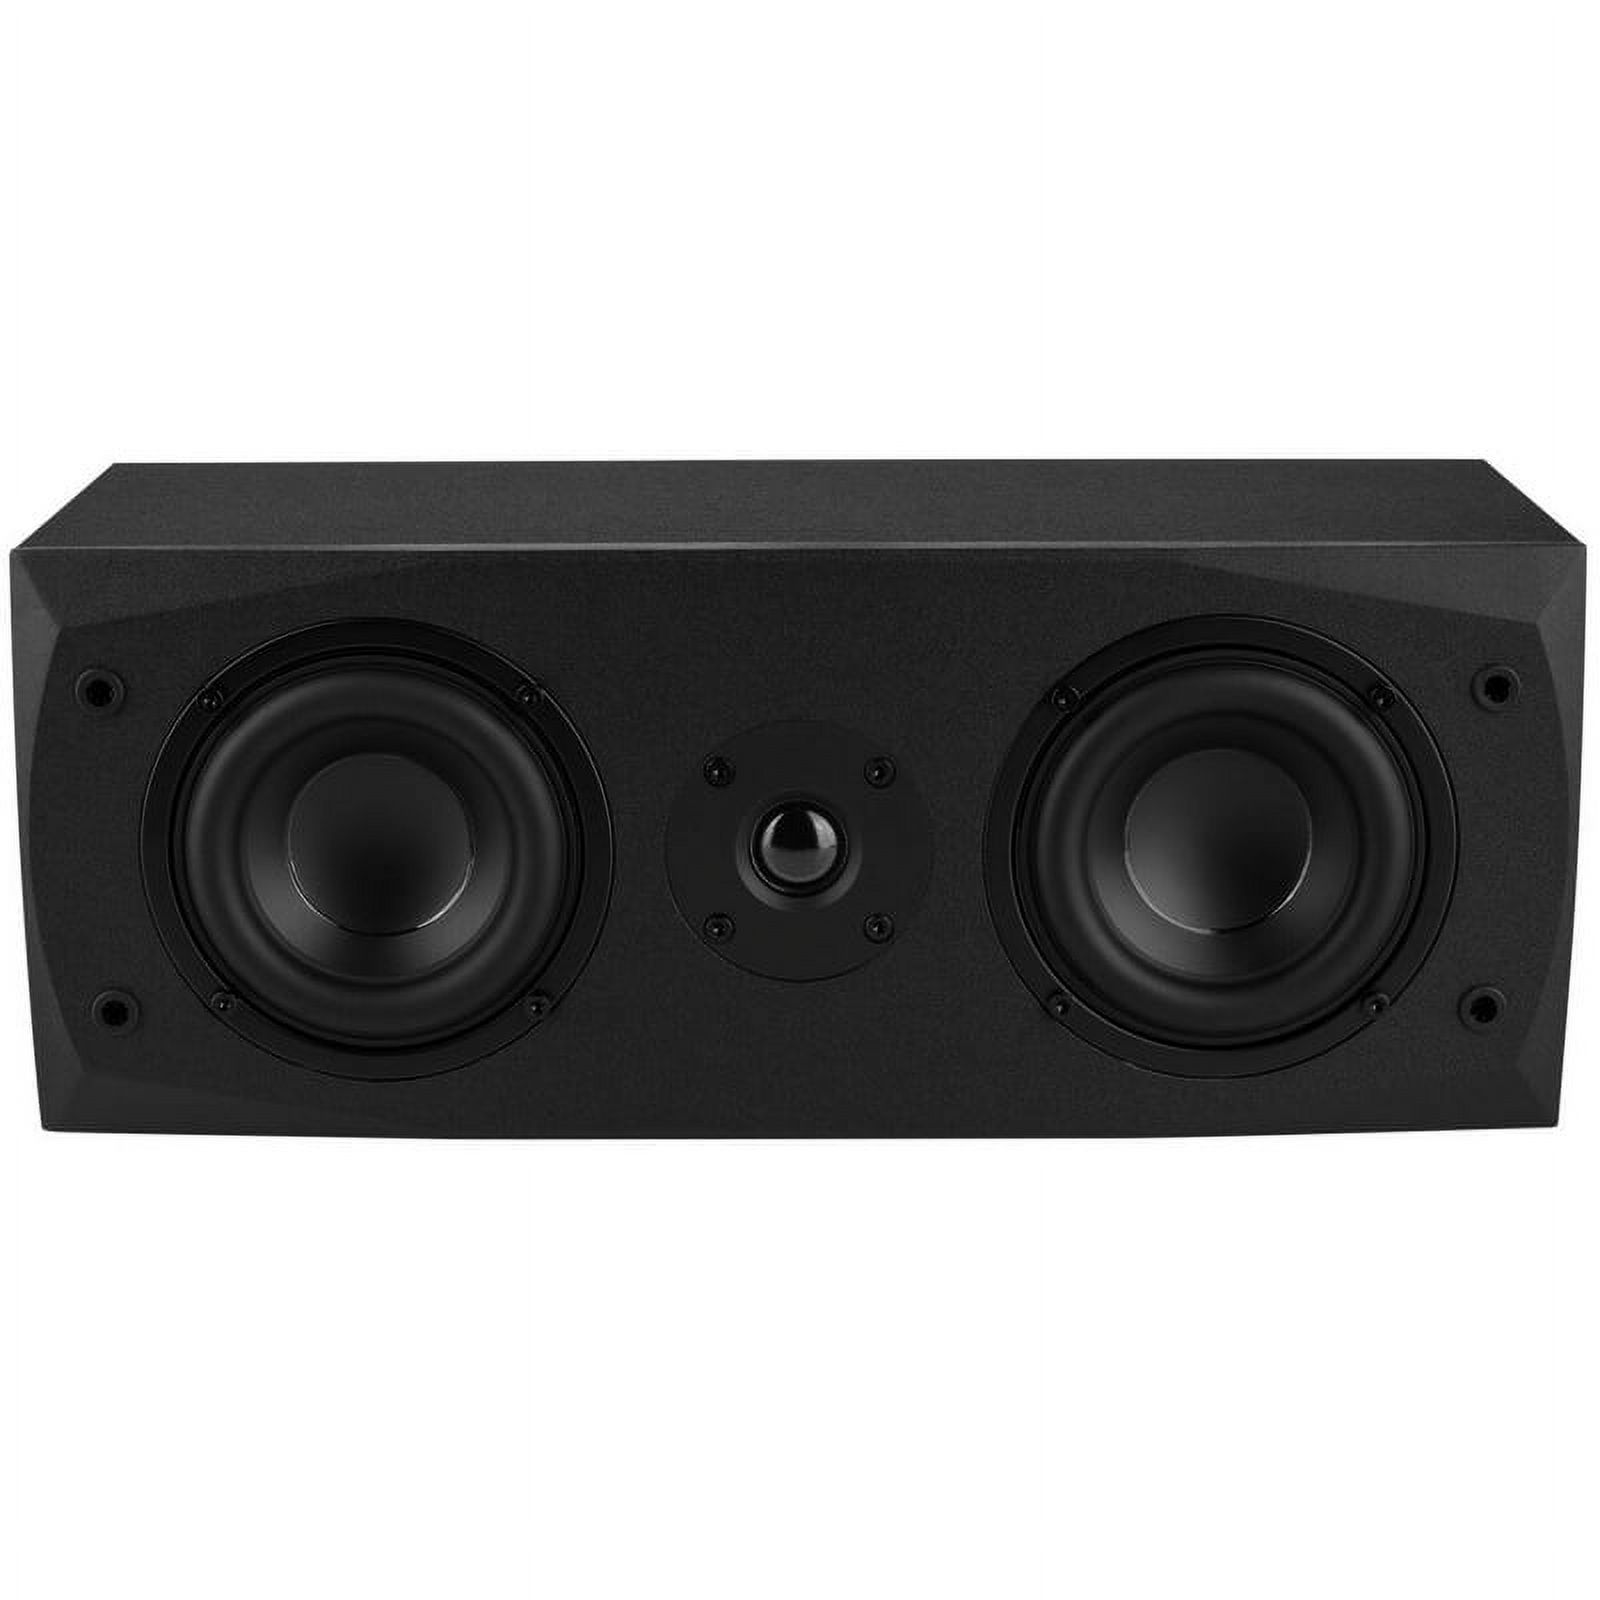 Dayton Audio MK442 Dual 4" 2-Way Center Channel Speaker - image 1 of 6